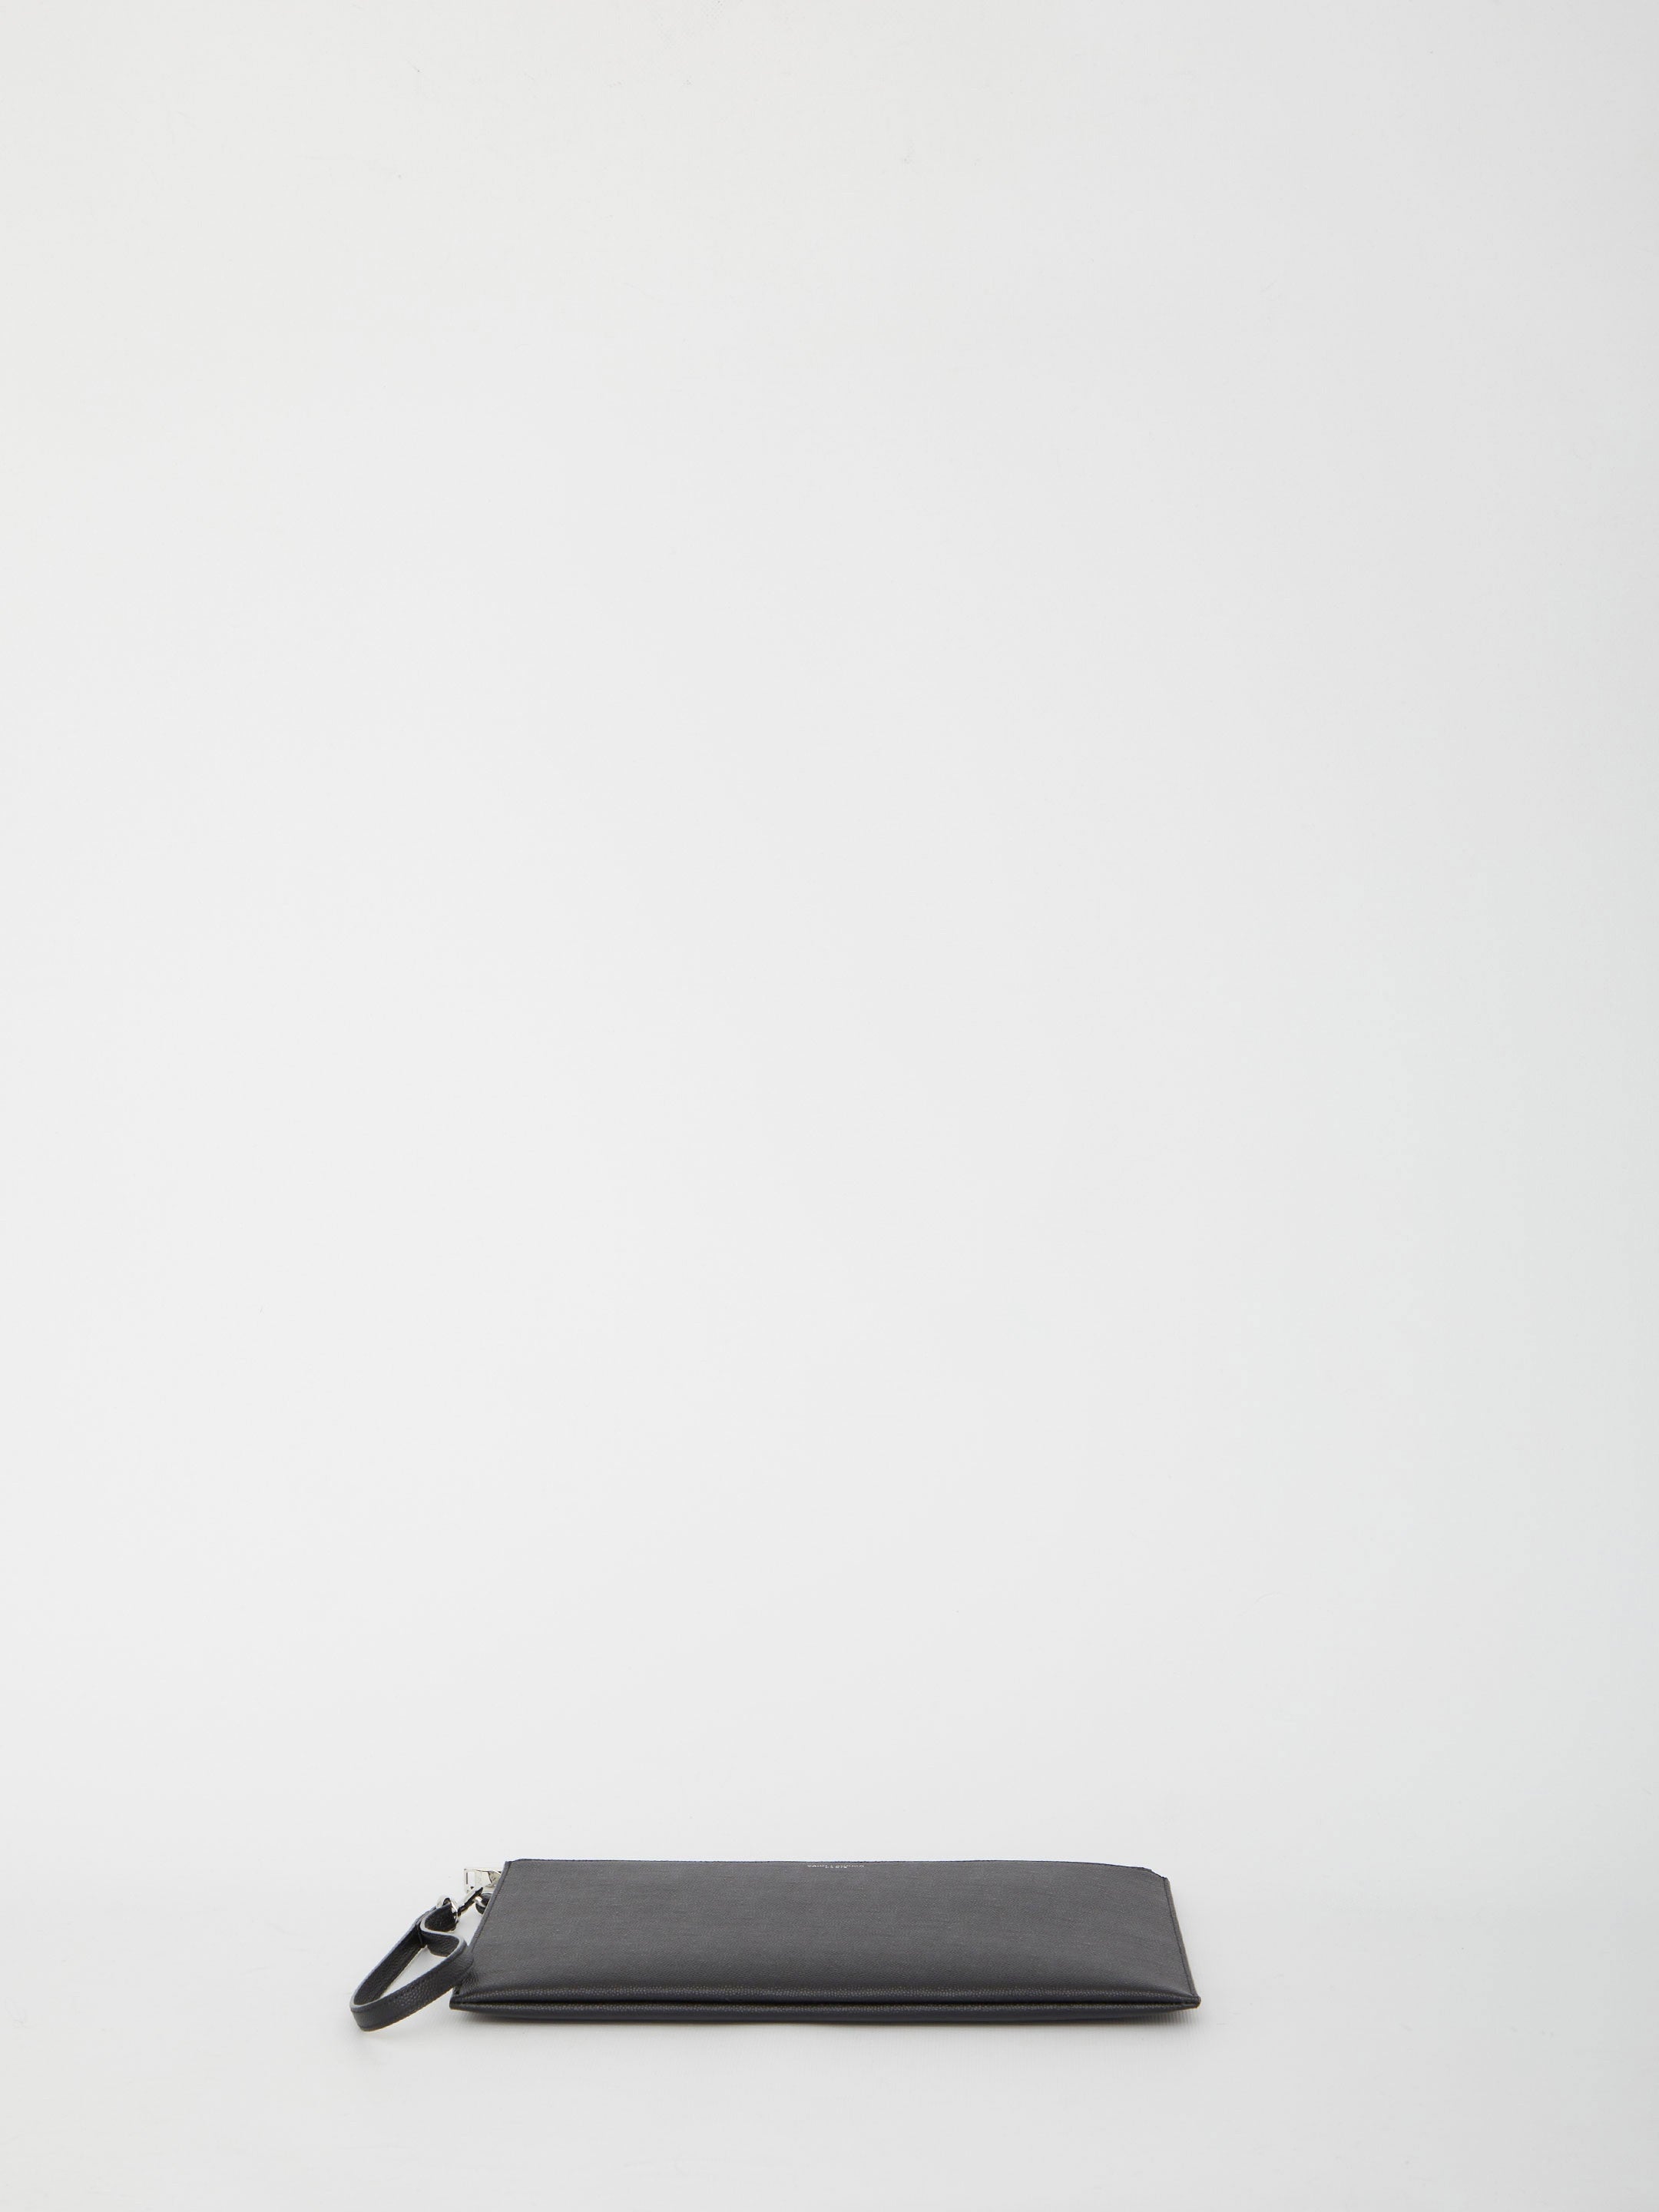 SAINT-LAURENT-OUTLET-SALE-Leather-tablet-holder-Taschen-QT-BLACK-ARCHIVE-COLLECTION-3.jpg